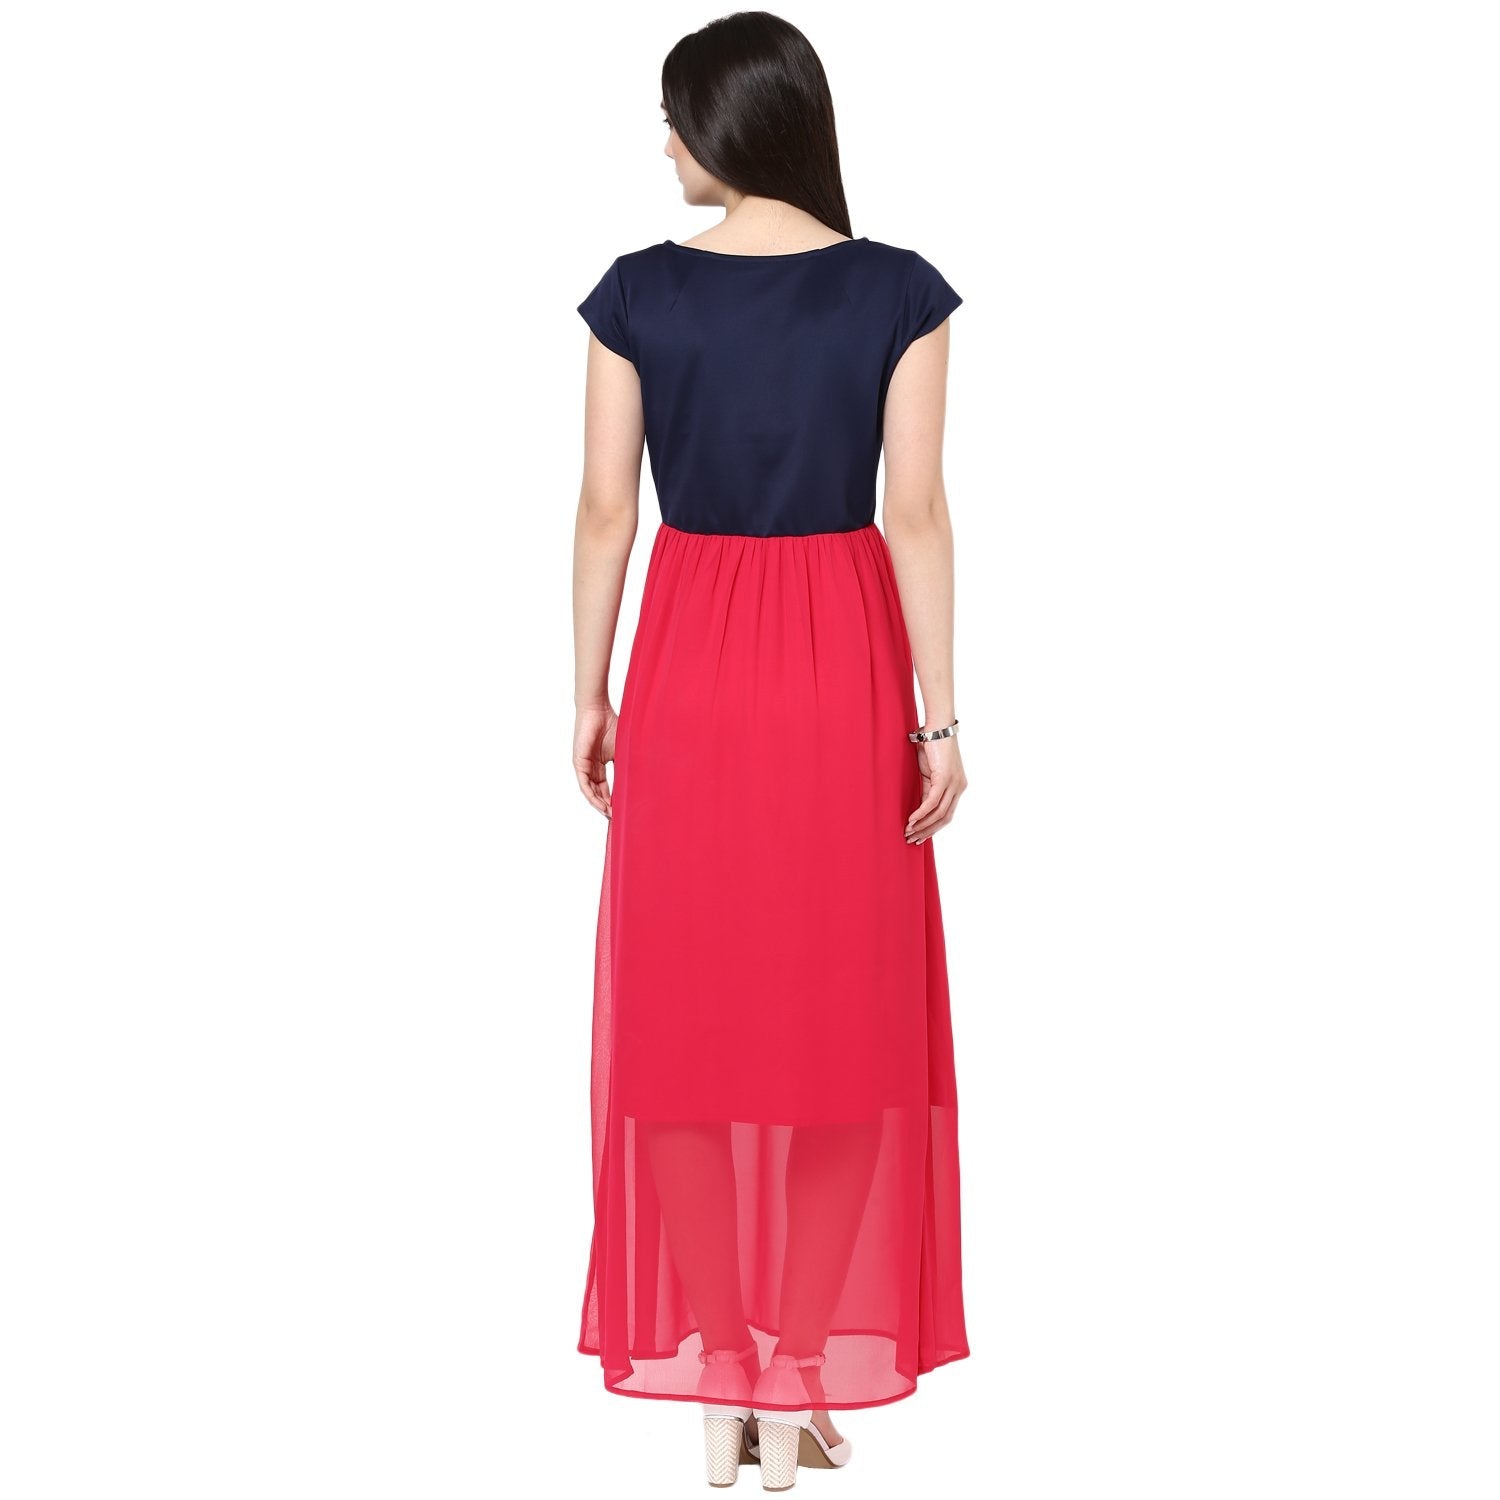 Women's Solid Dress - Pannkh